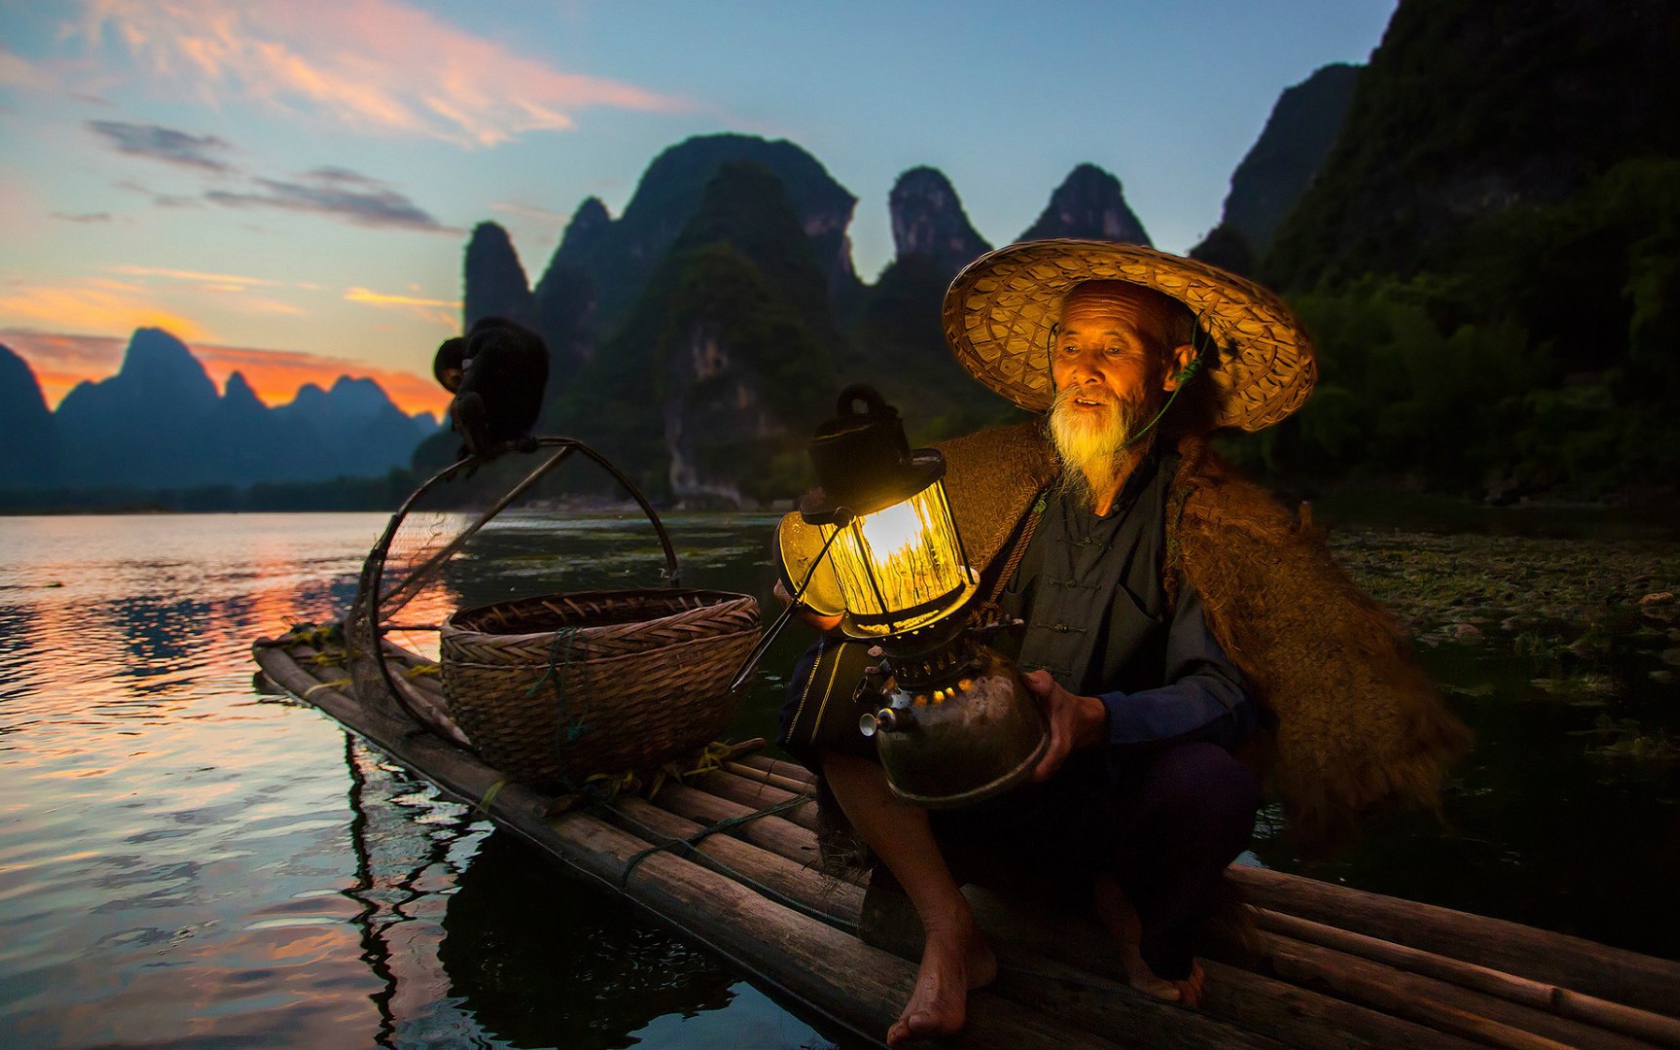 Fisherman and cormorant fishing in China